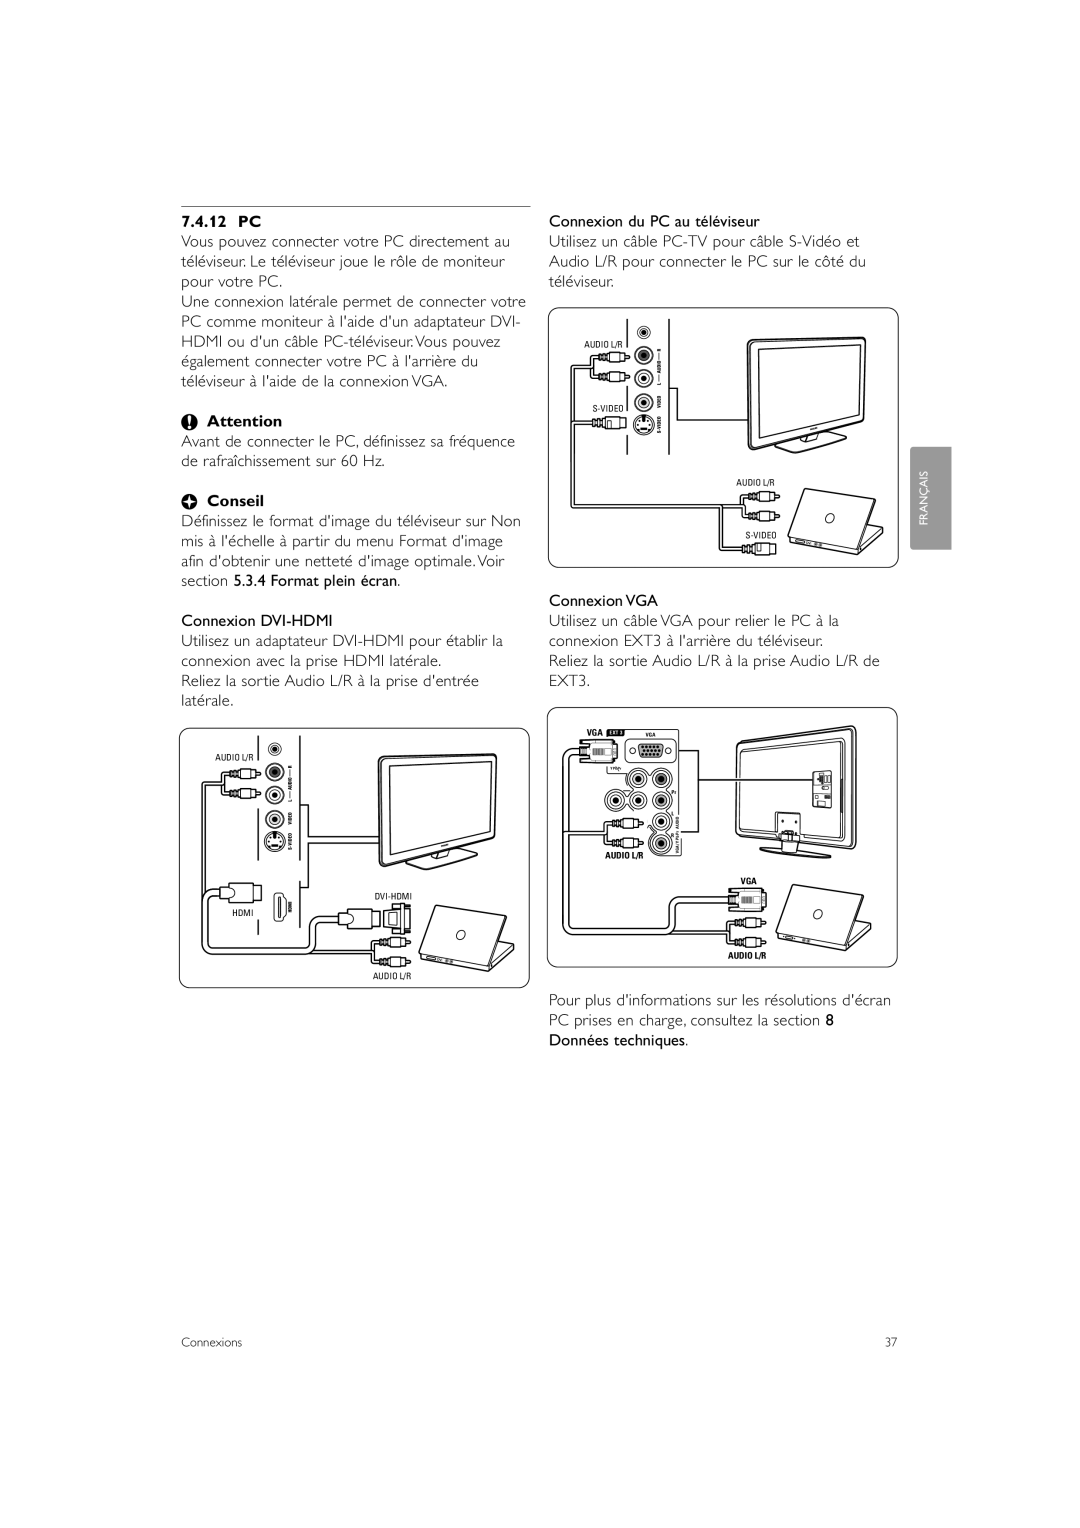 Philips 37PFL7403, 47PFL7403 manual 7.4.12 PC, ç Attention, à Conseil, Connexion DVI-HDMI 